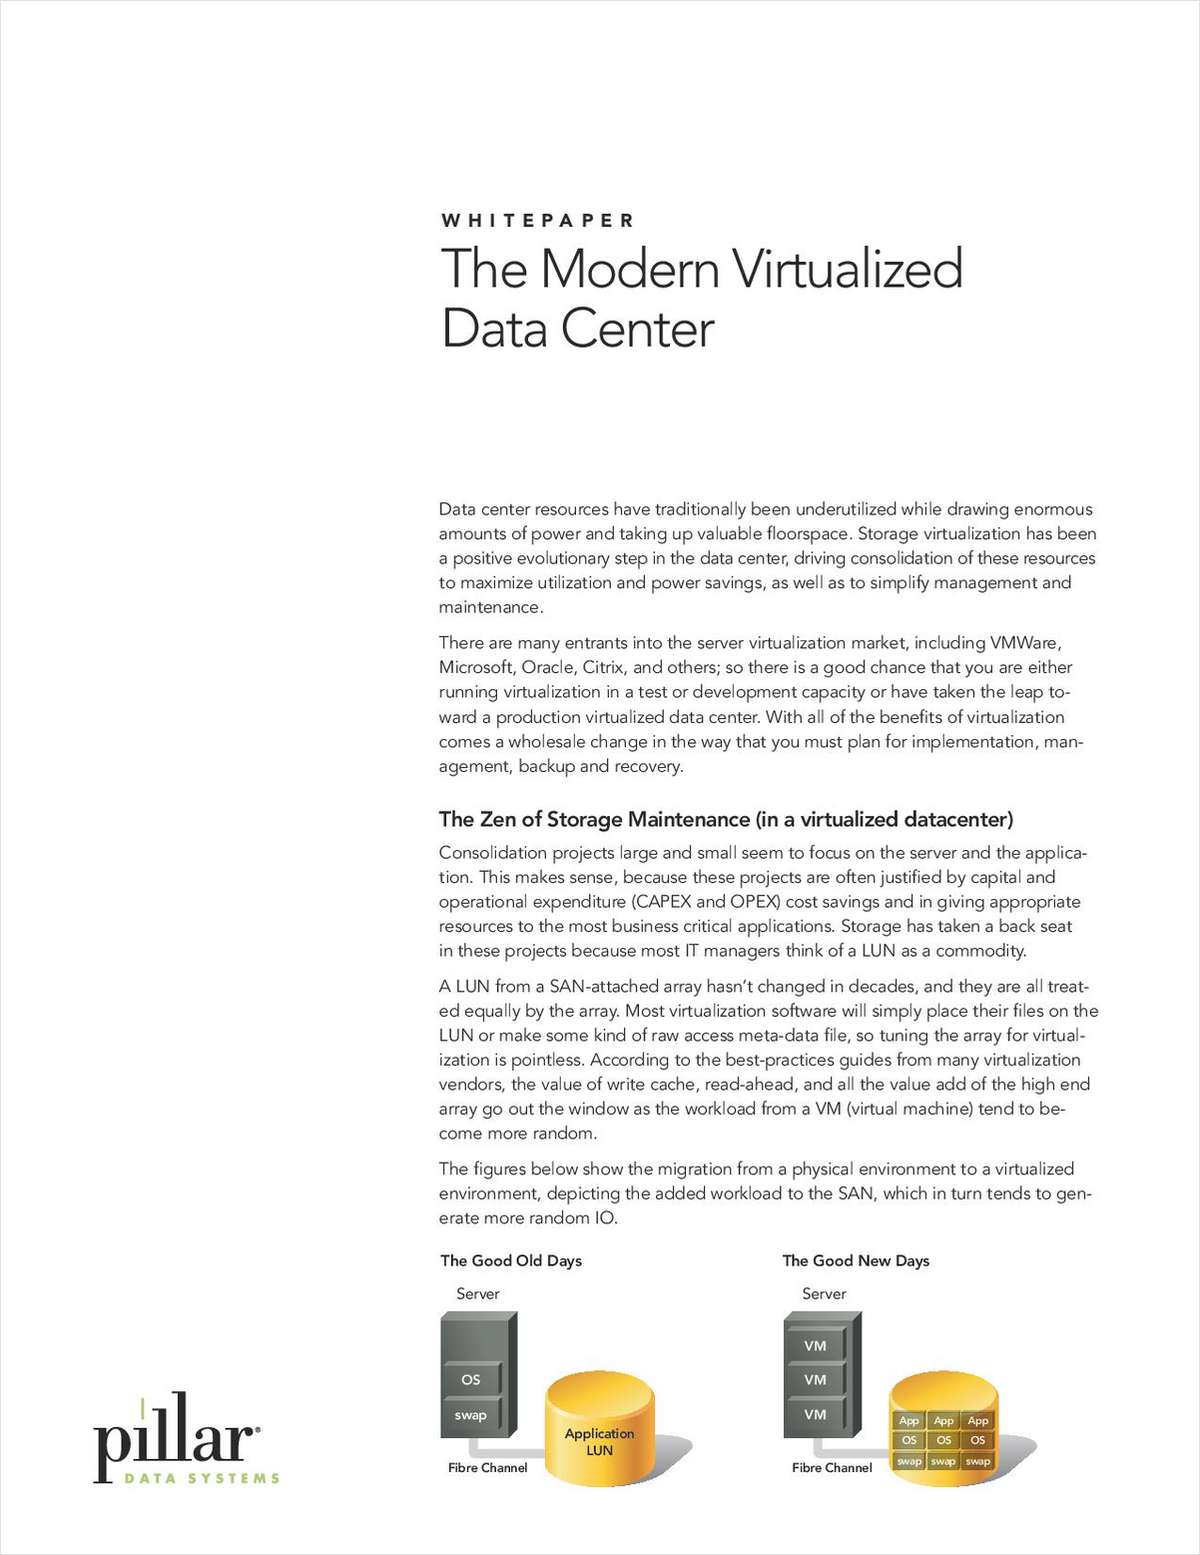 The Modern Virtualized Data Center